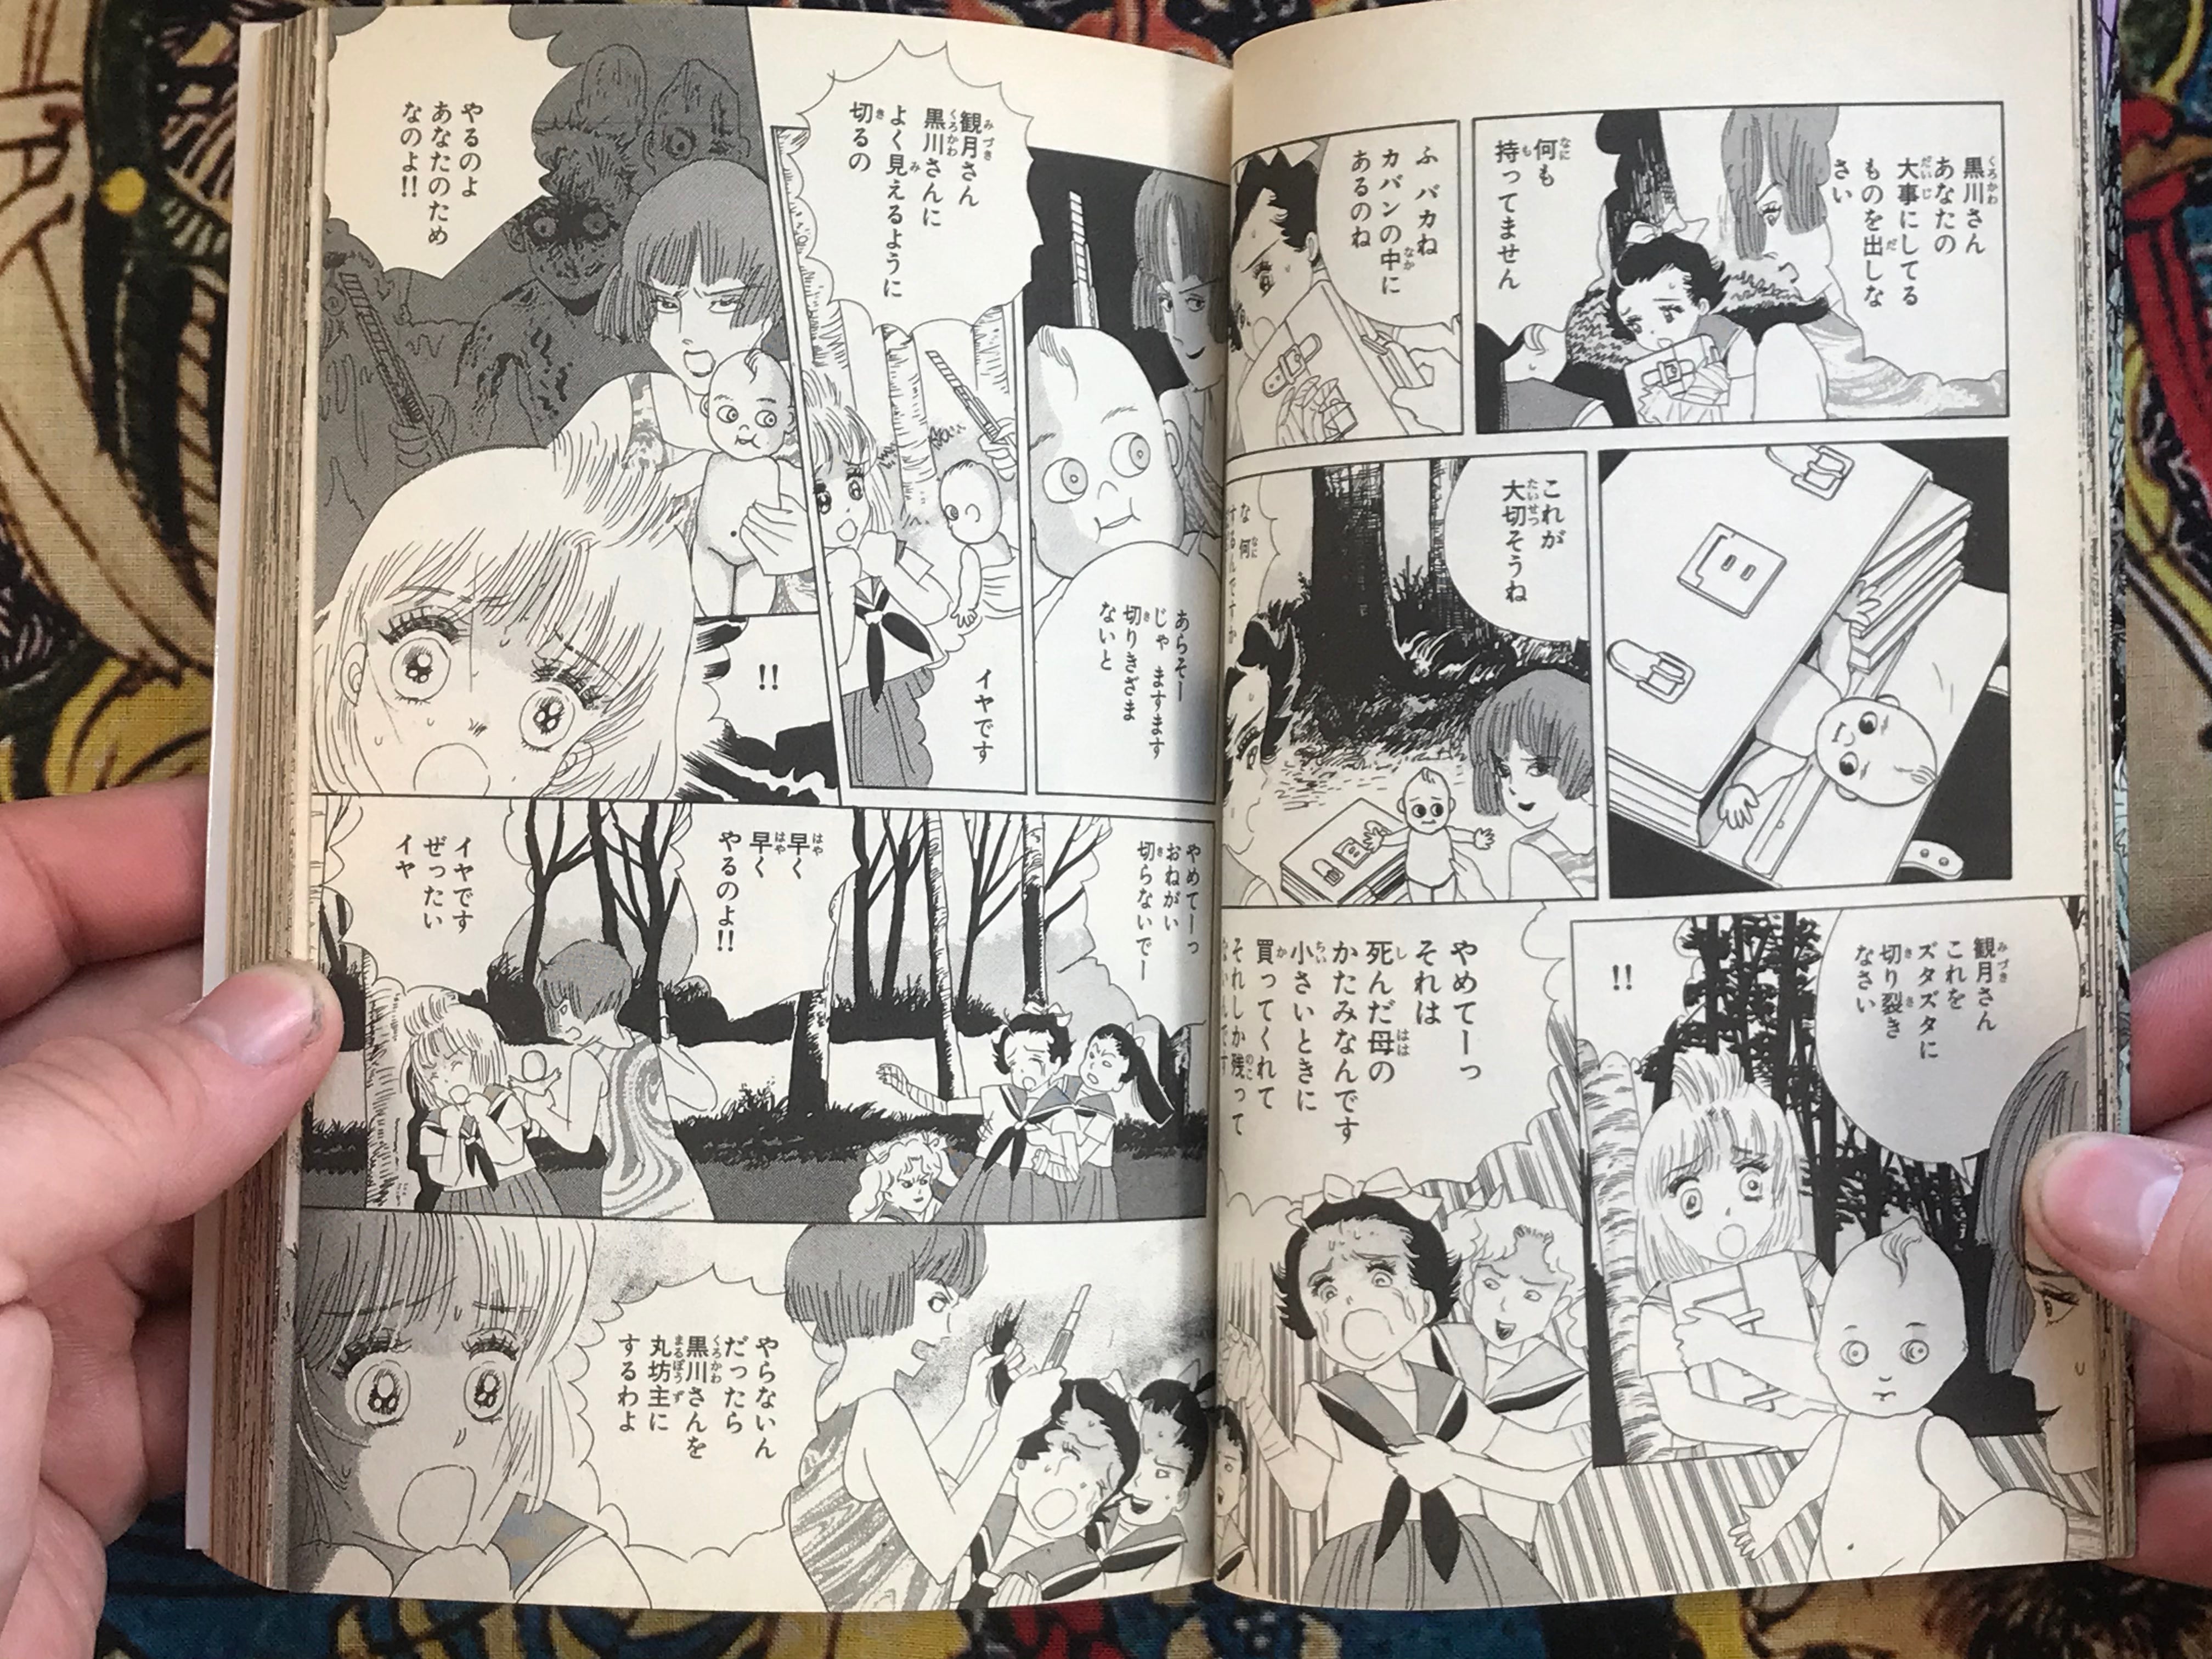 Yurei School Horror Diary by Yumeji Tanima (1995)